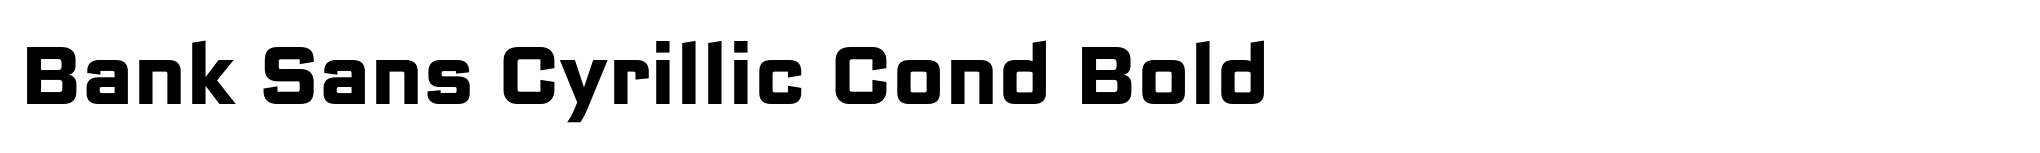 Bank Sans Cyrillic Cond Bold image